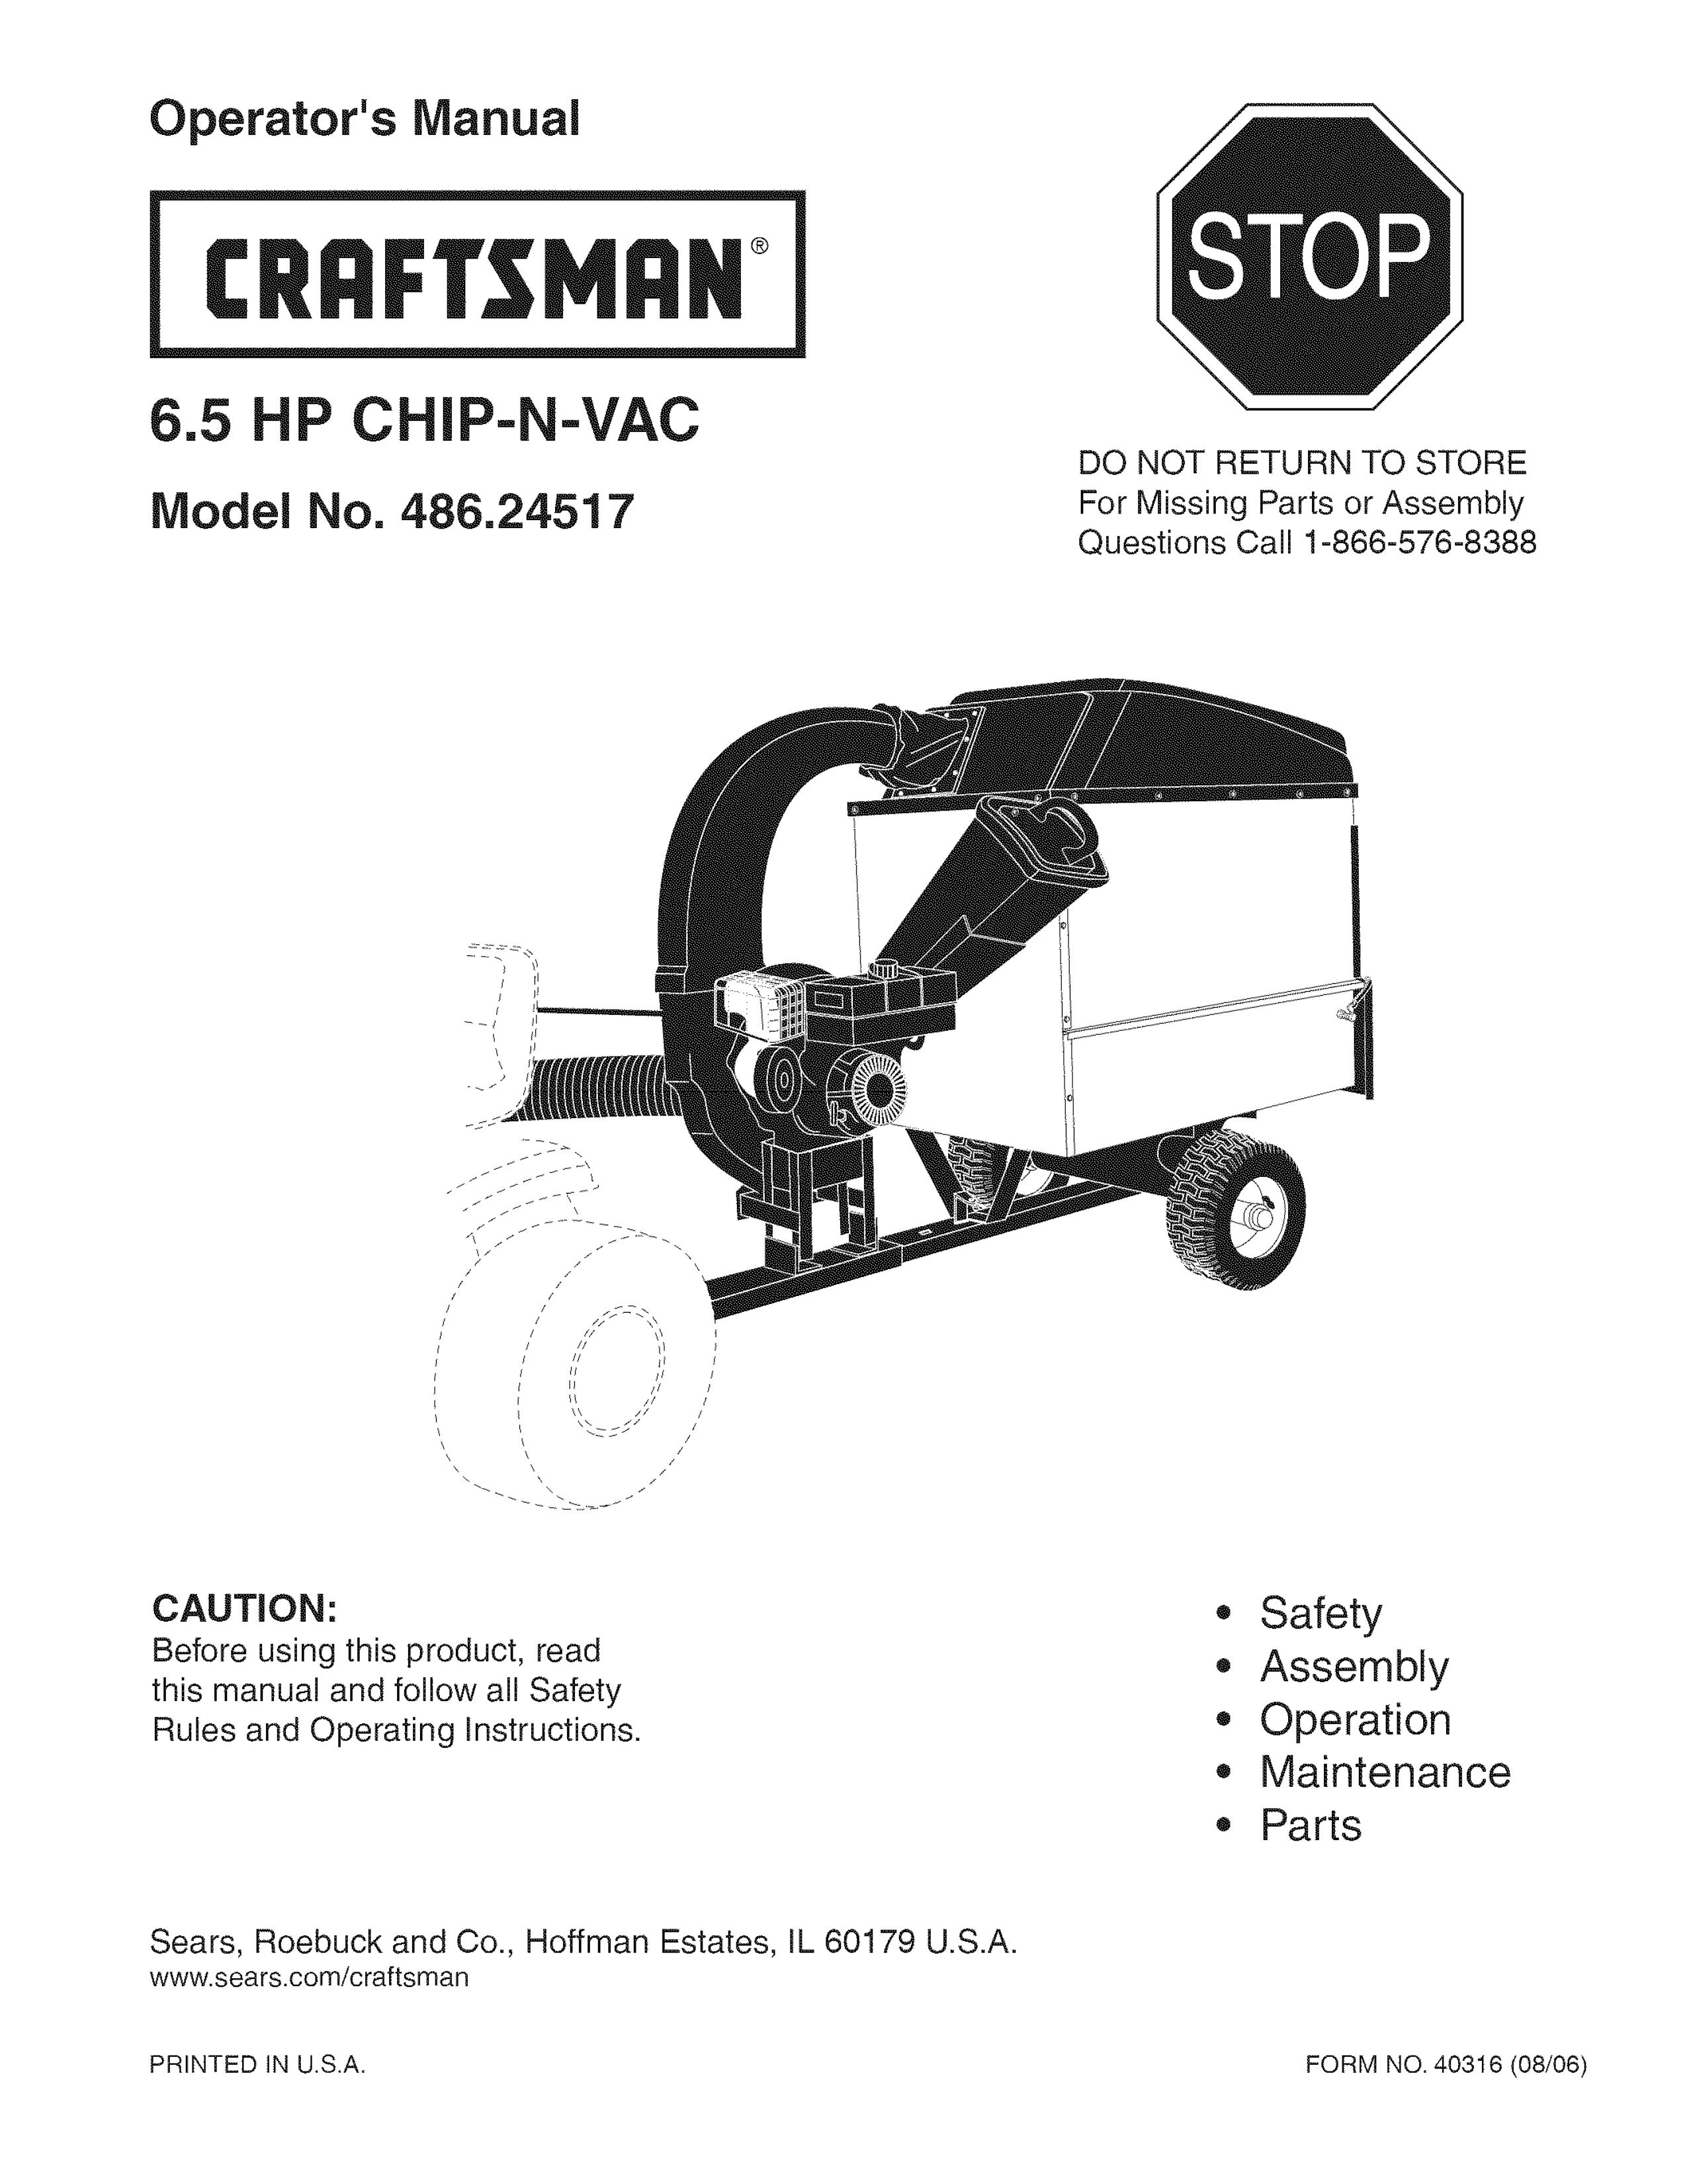 Craftsman 486.24517 Chipper User Manual